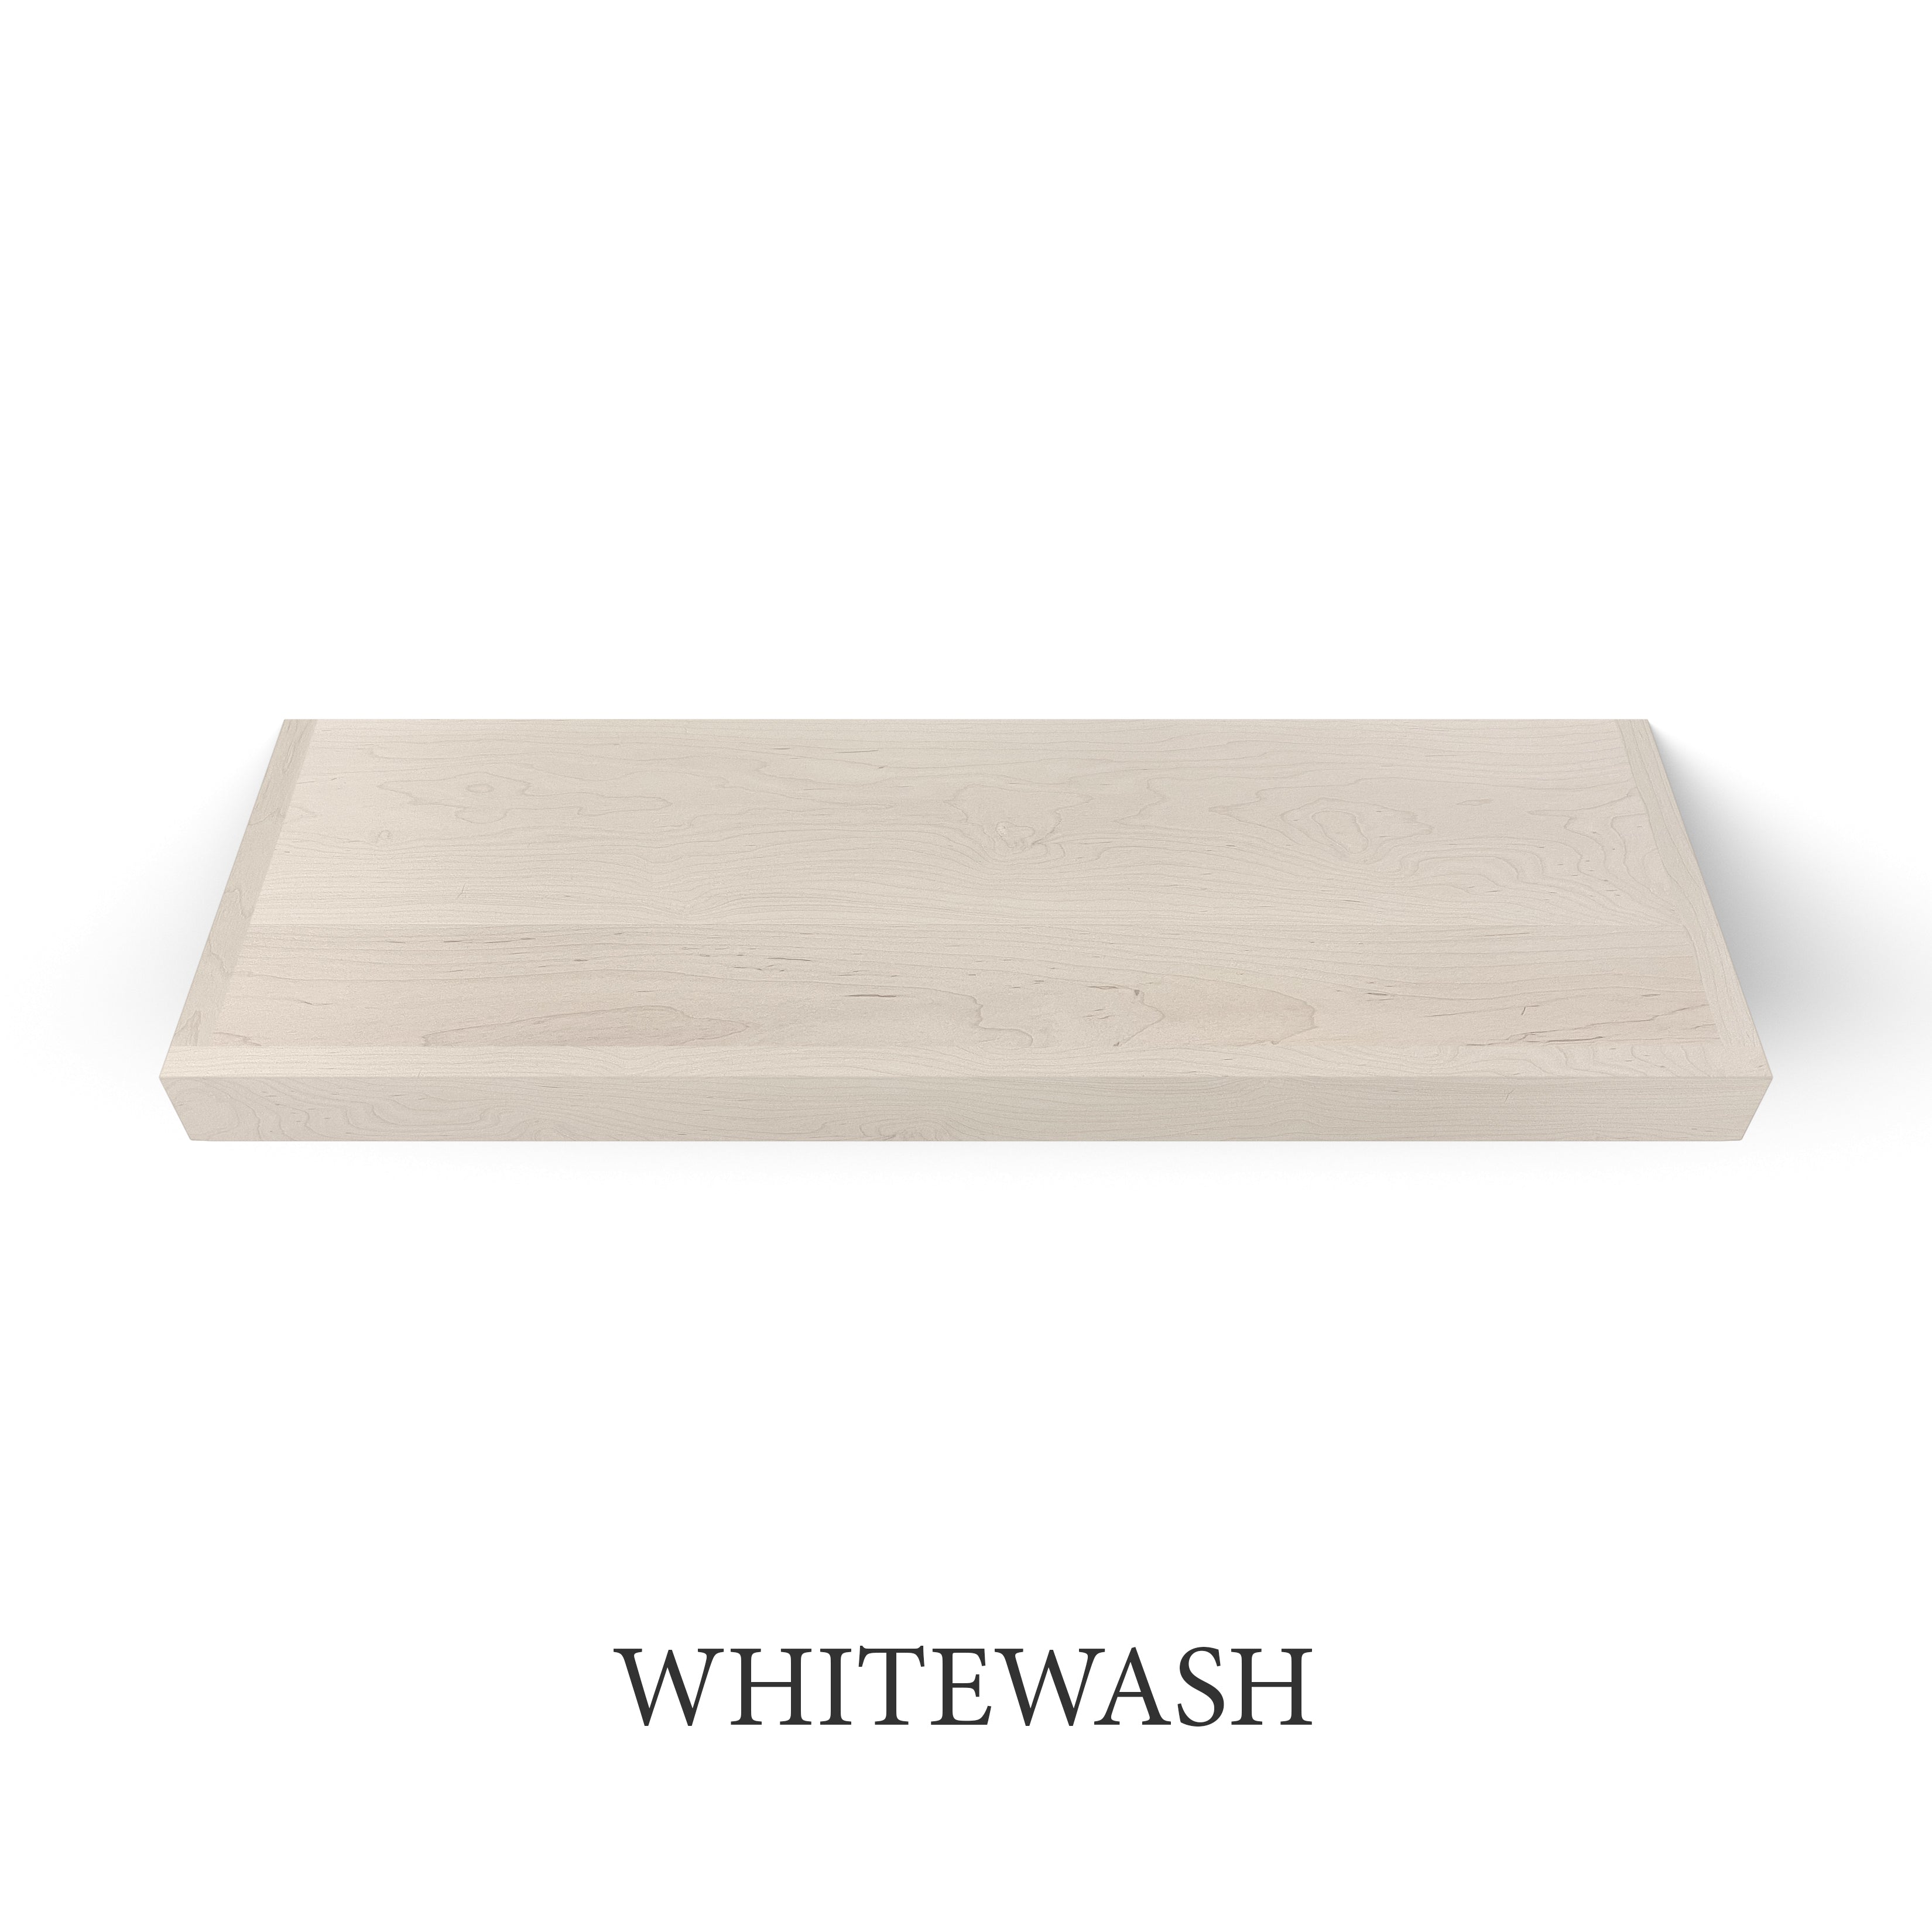 whitewash Maple 2 inch Thick Floating Shelf